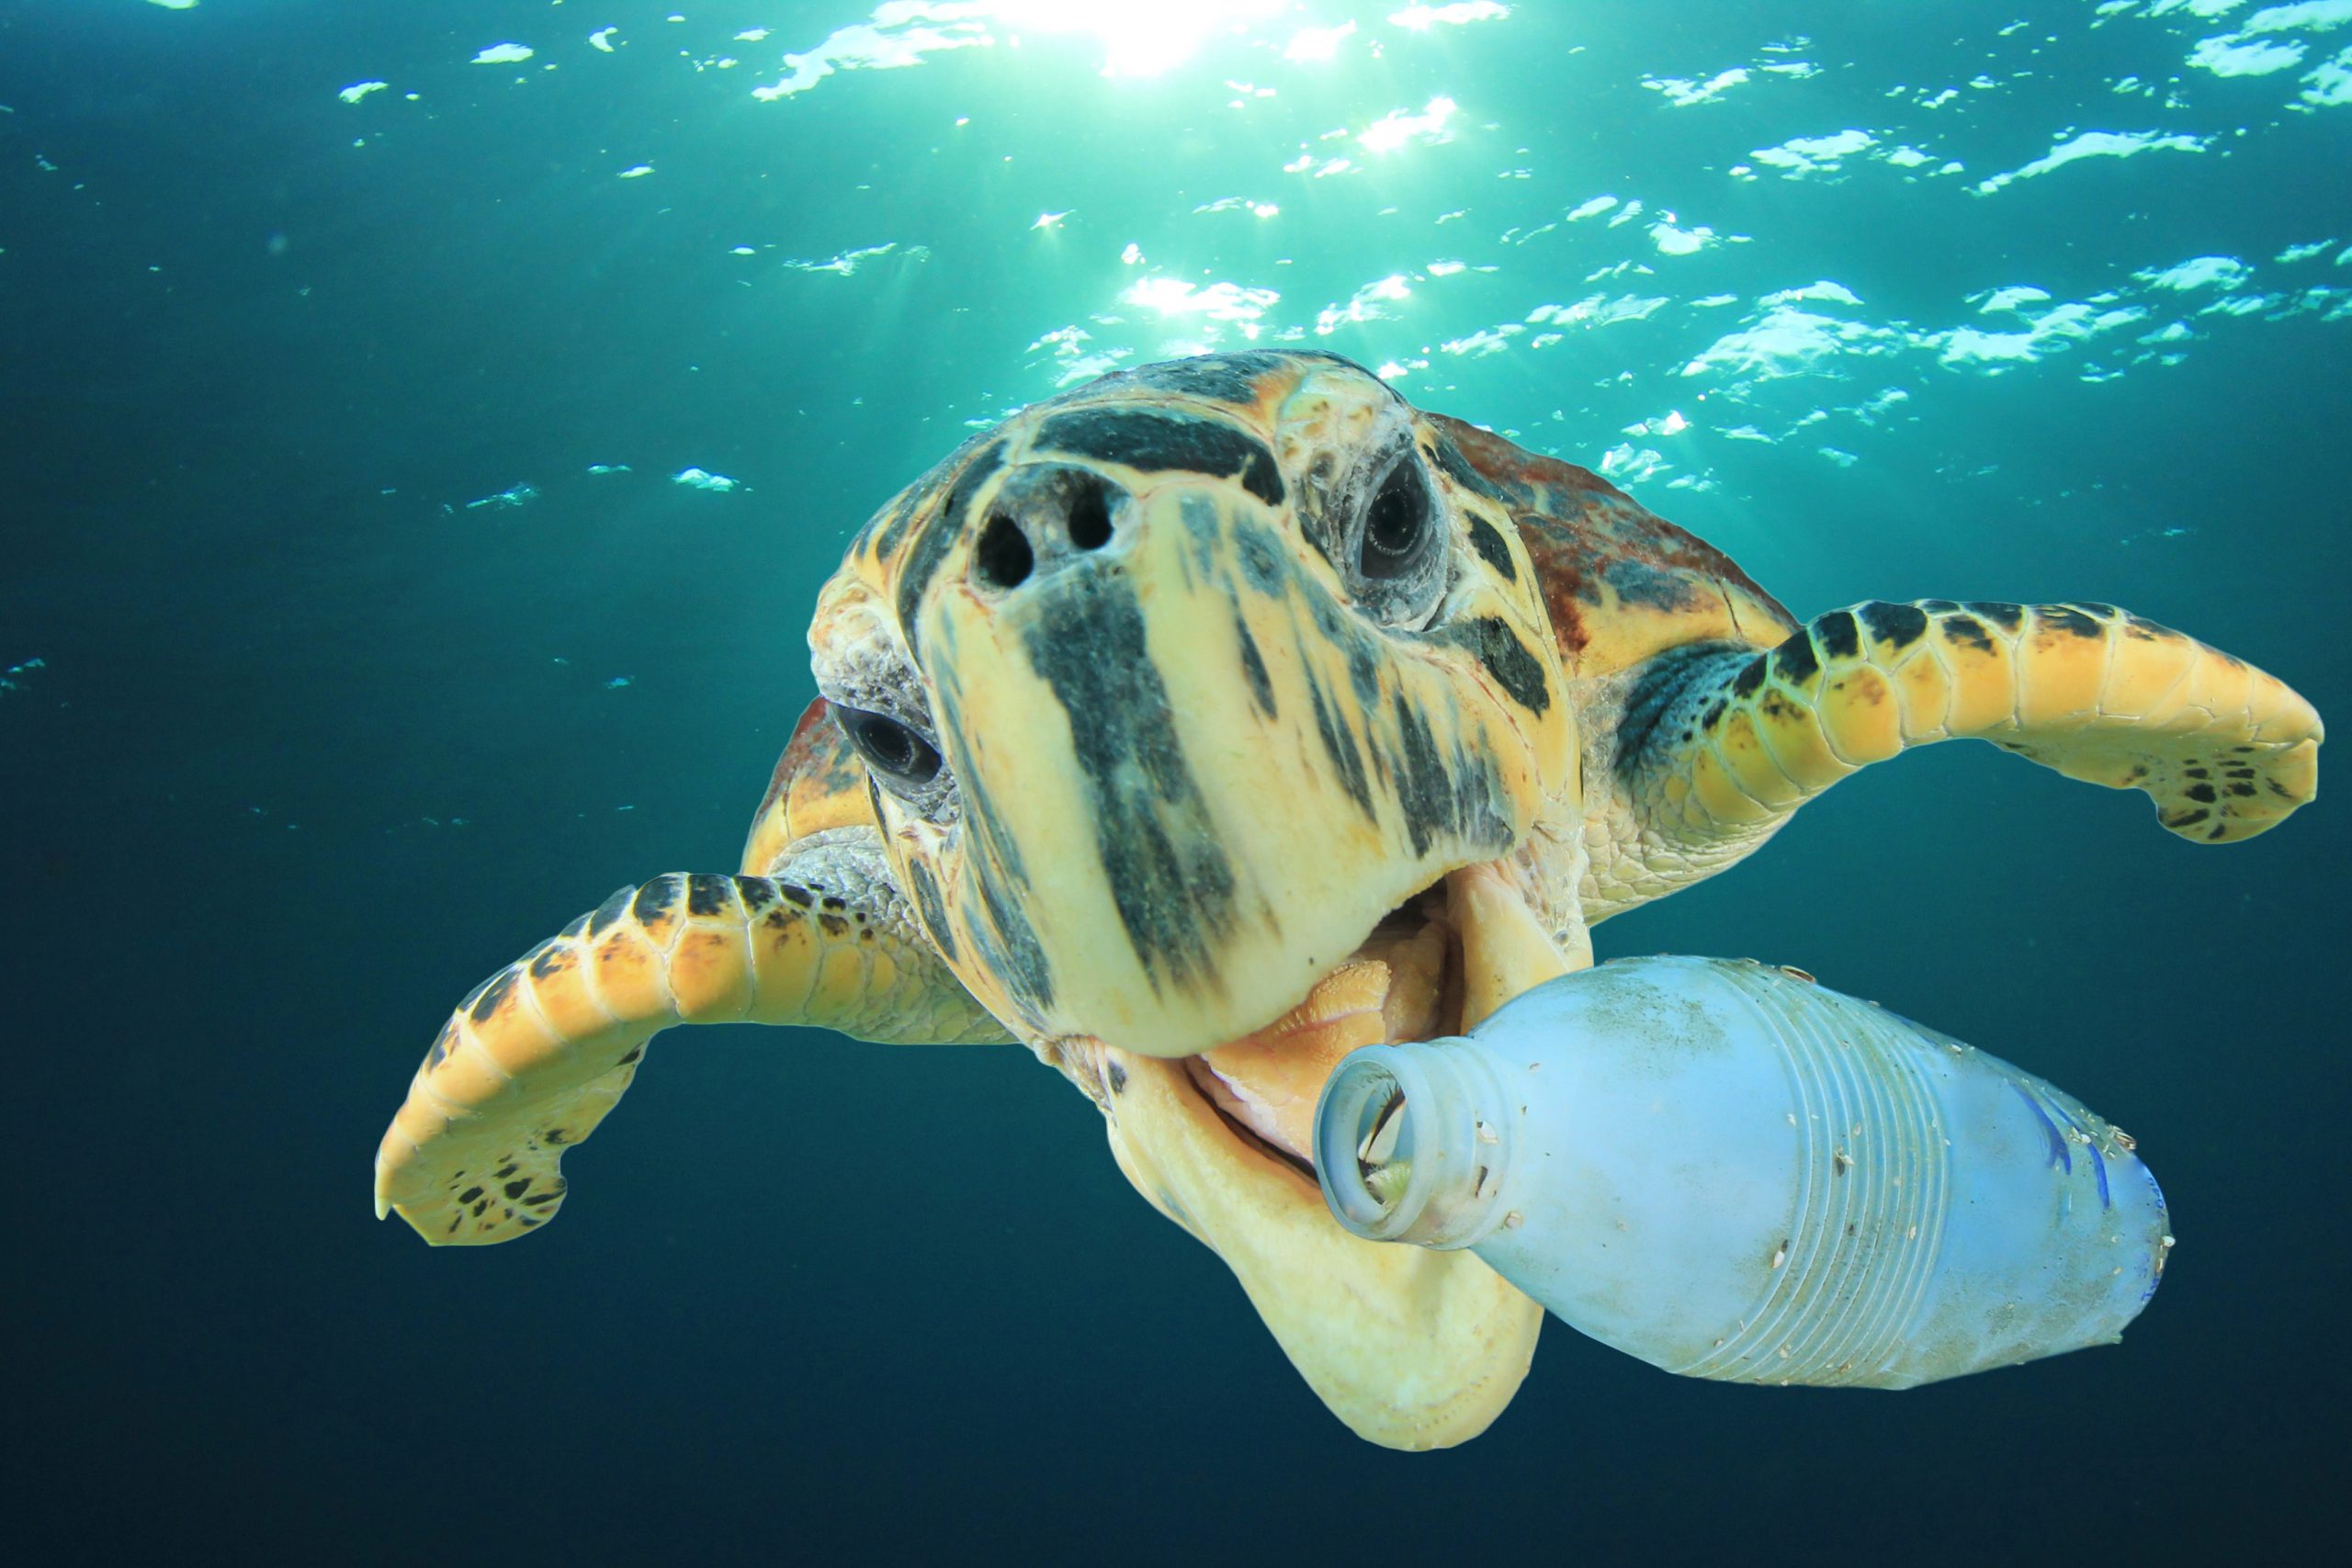 Plastic pollution problem - Sea Turtle eating plastic bottle in